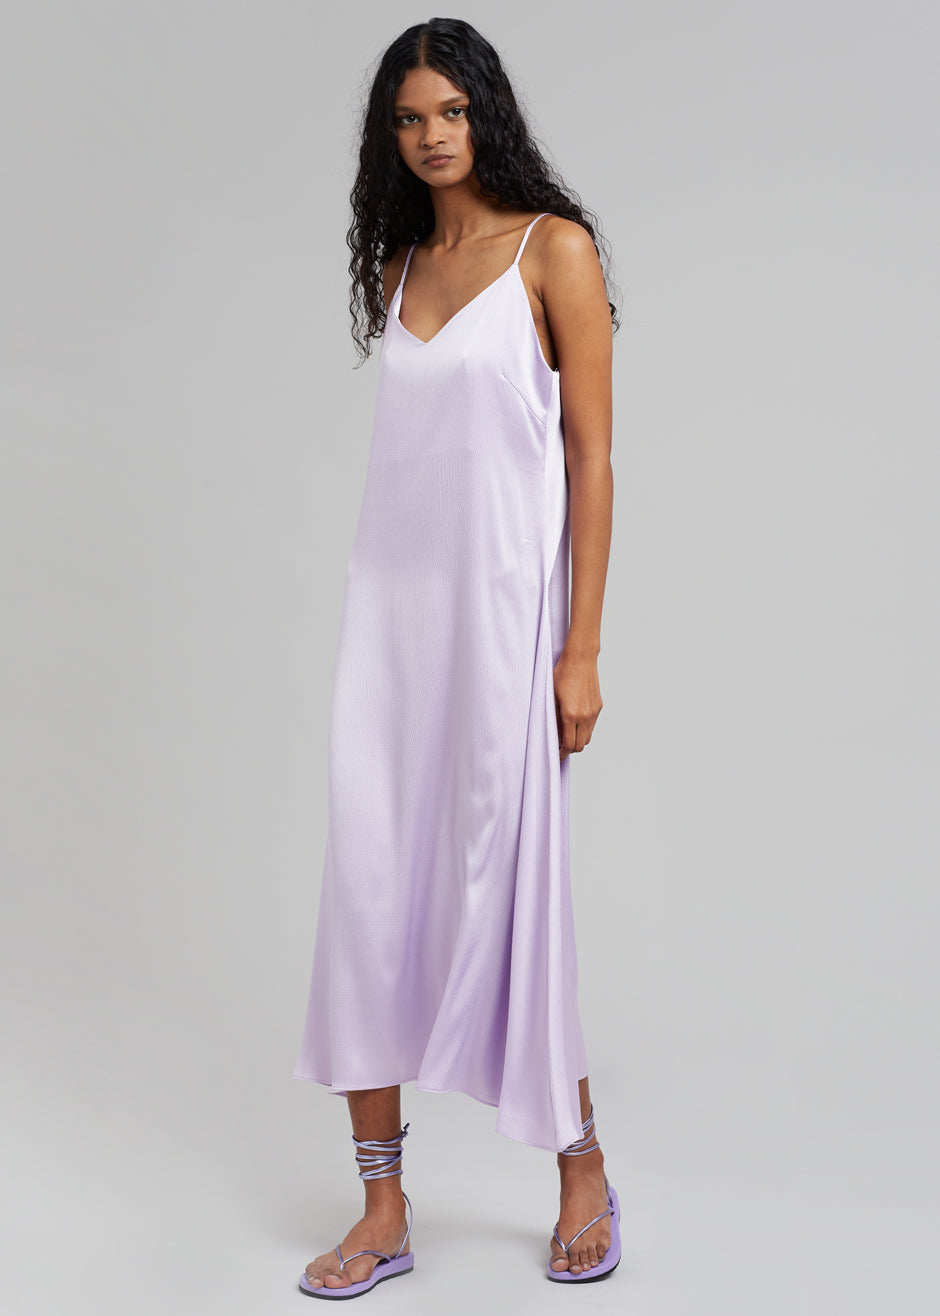 Cordelia Satin Dress - Lilac - 4